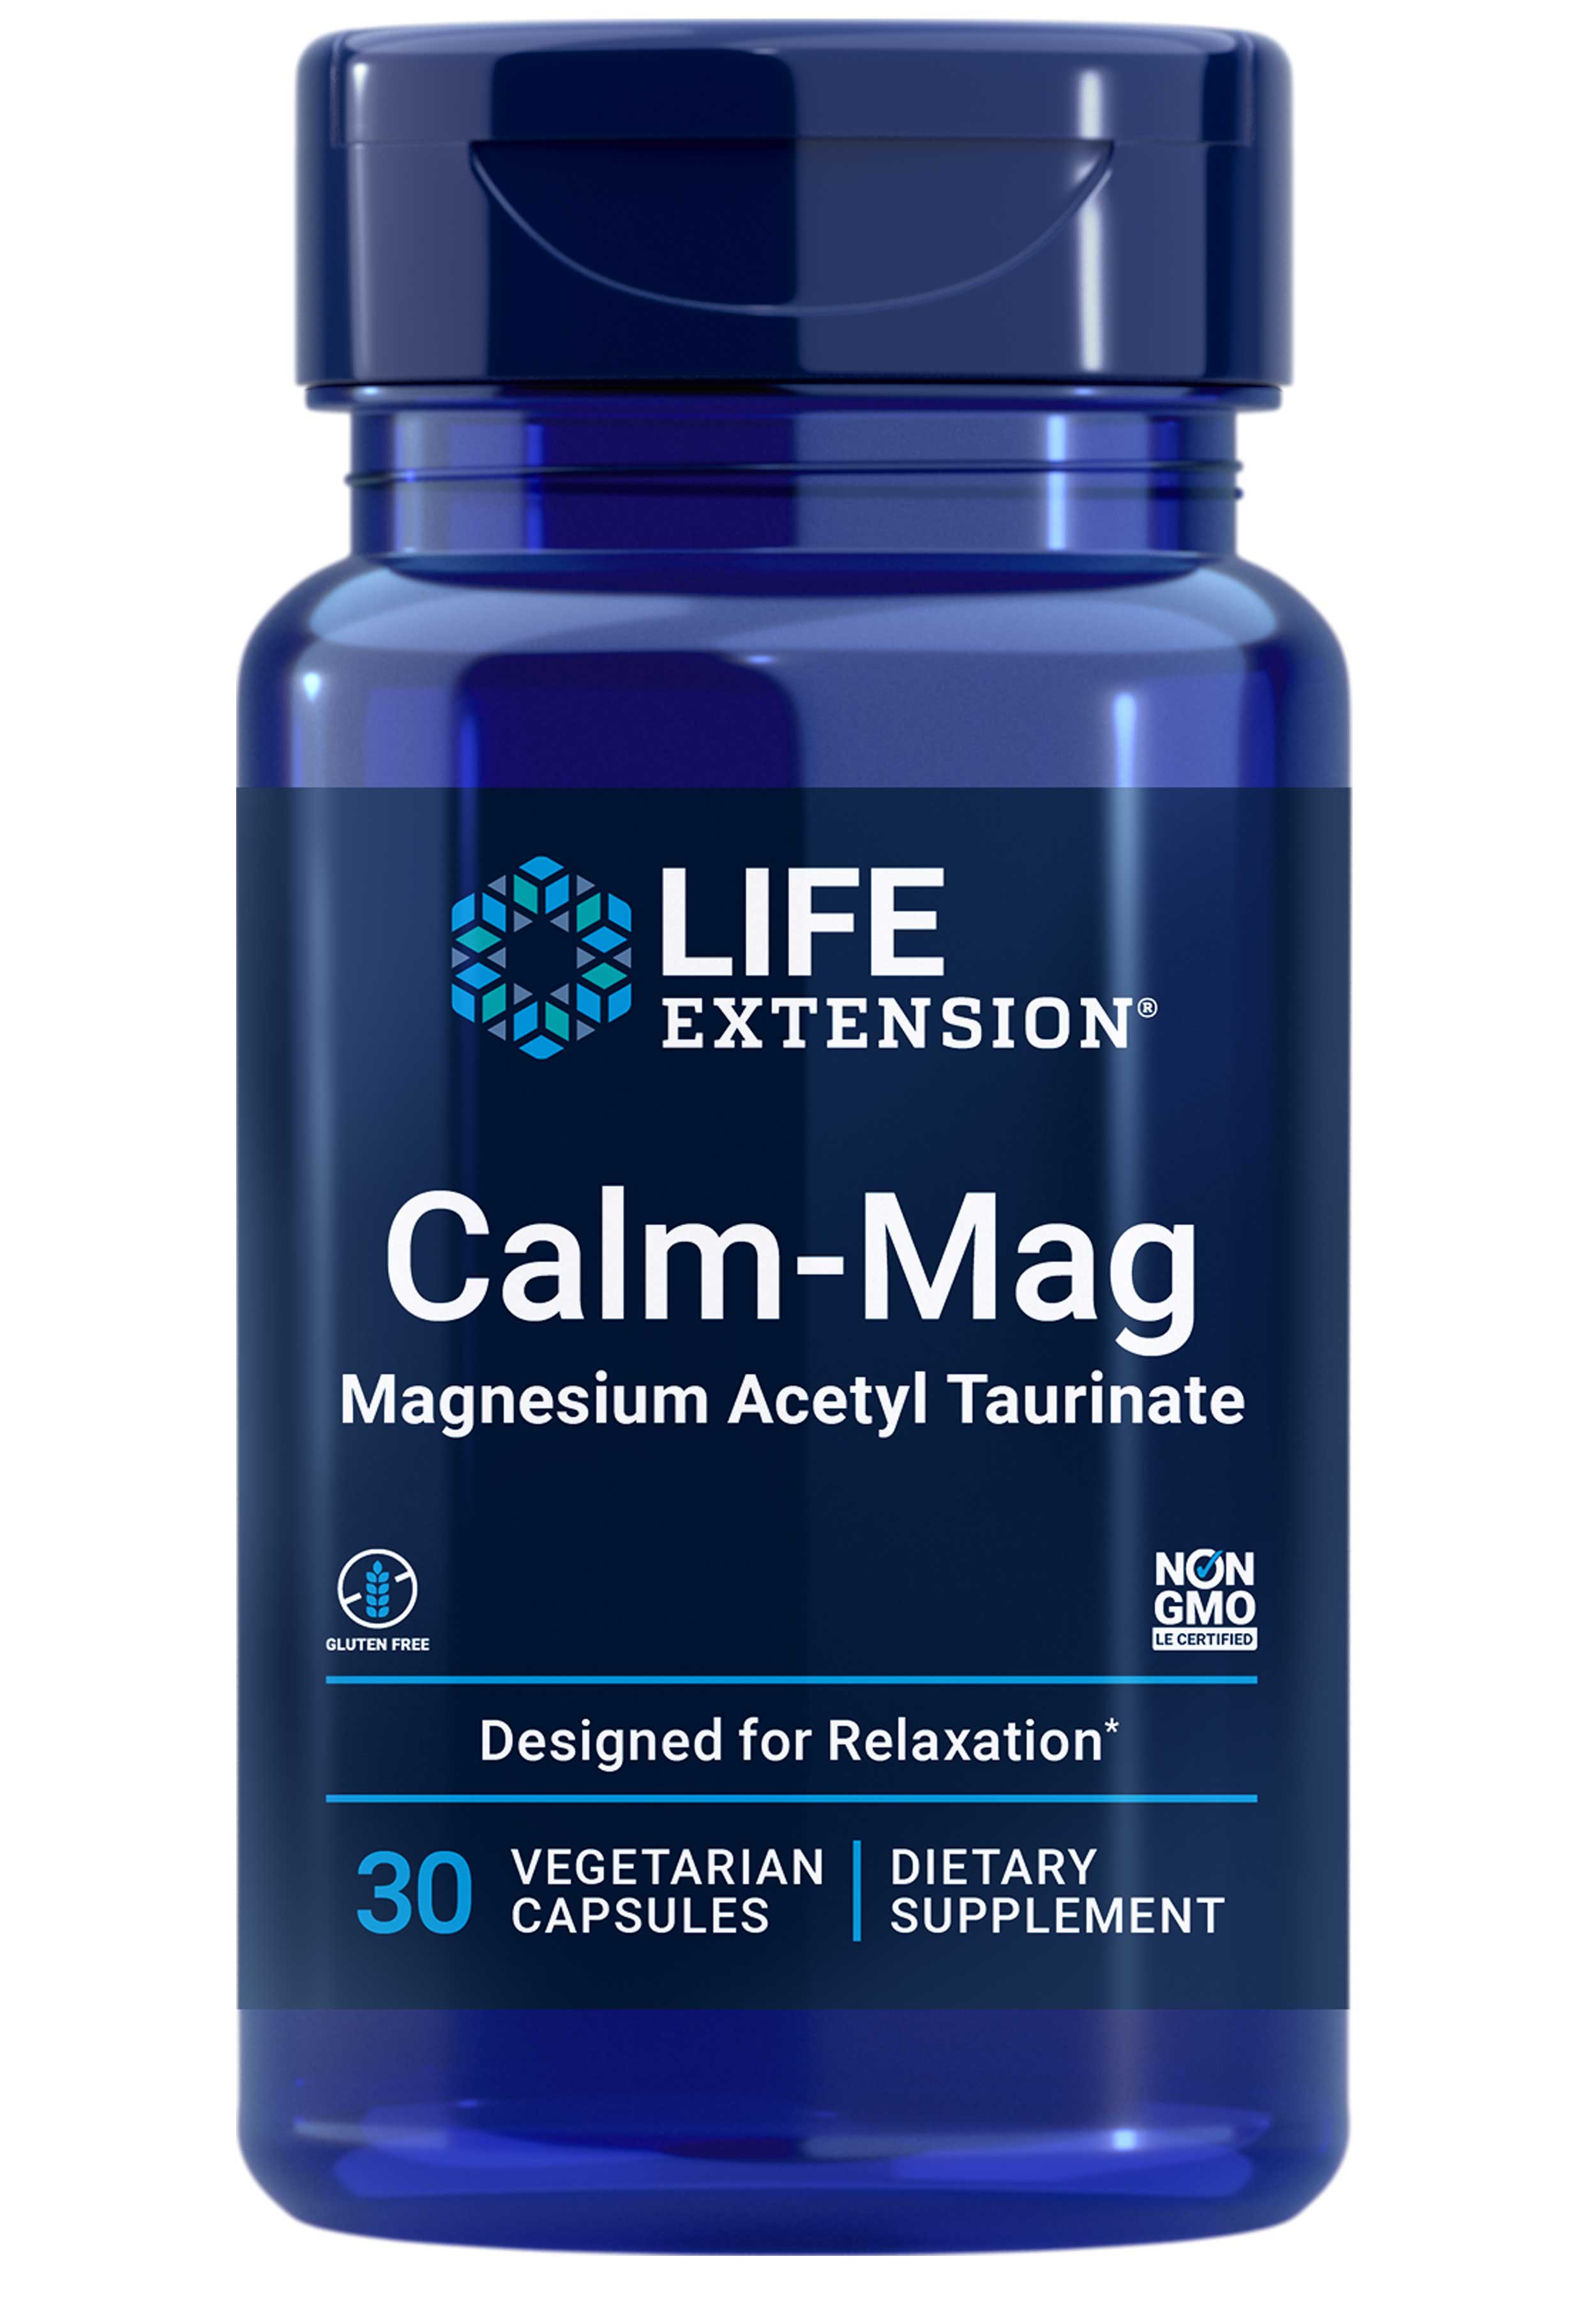 Life Extension Calm-Mag